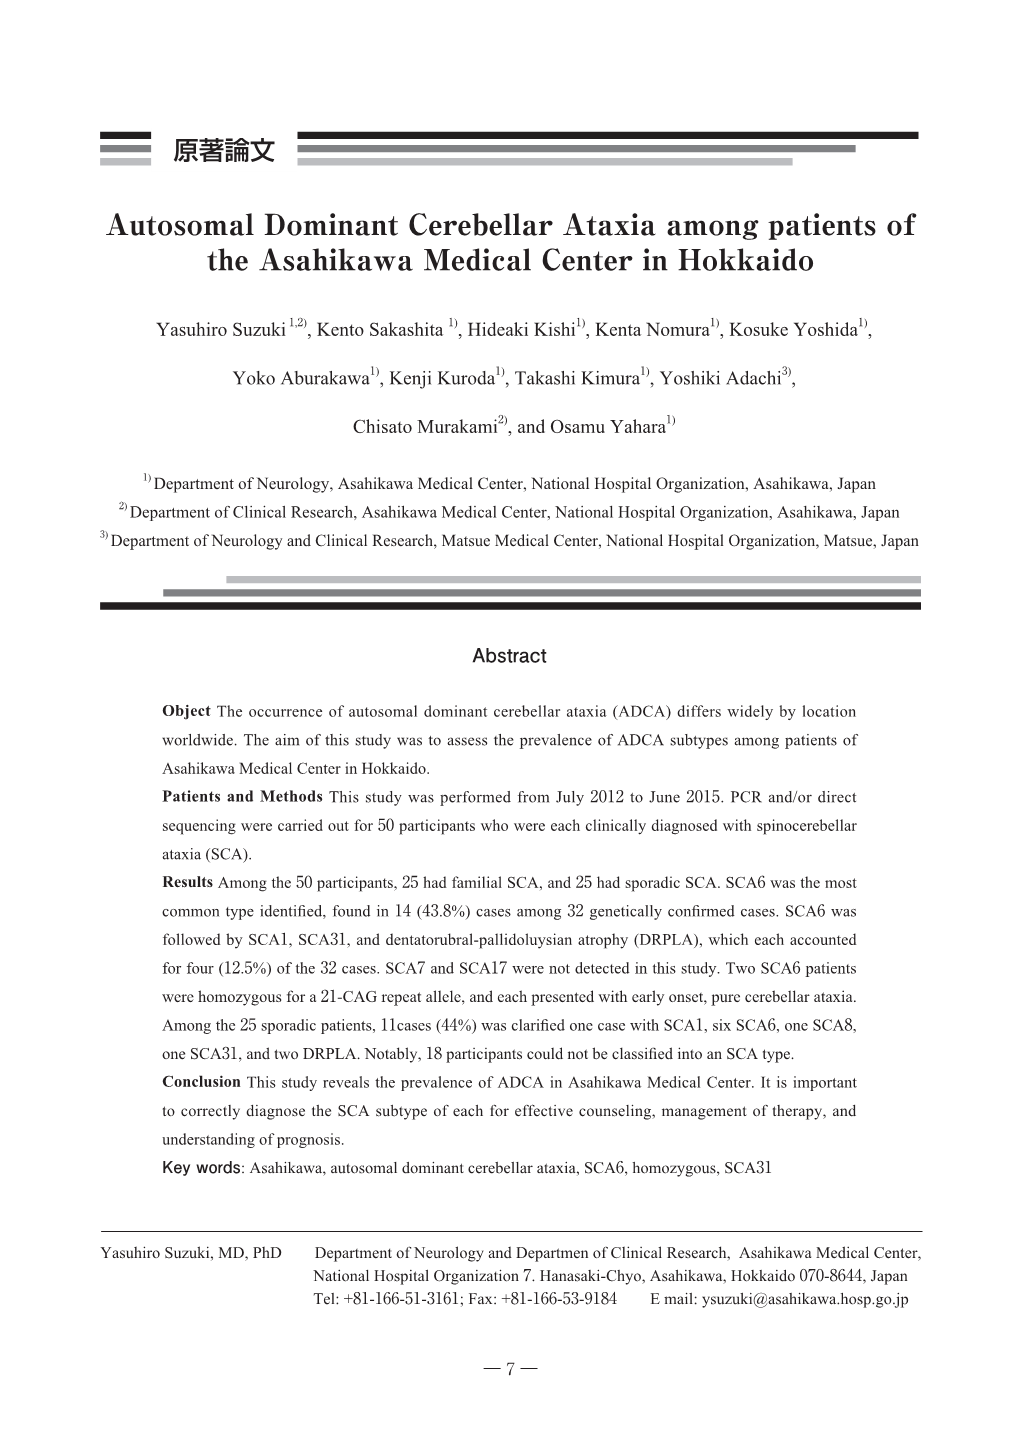 Autosomal Dominant Cerebellar Ataxia Among Patients of the Asahikawa Medical Center in Hokkaido